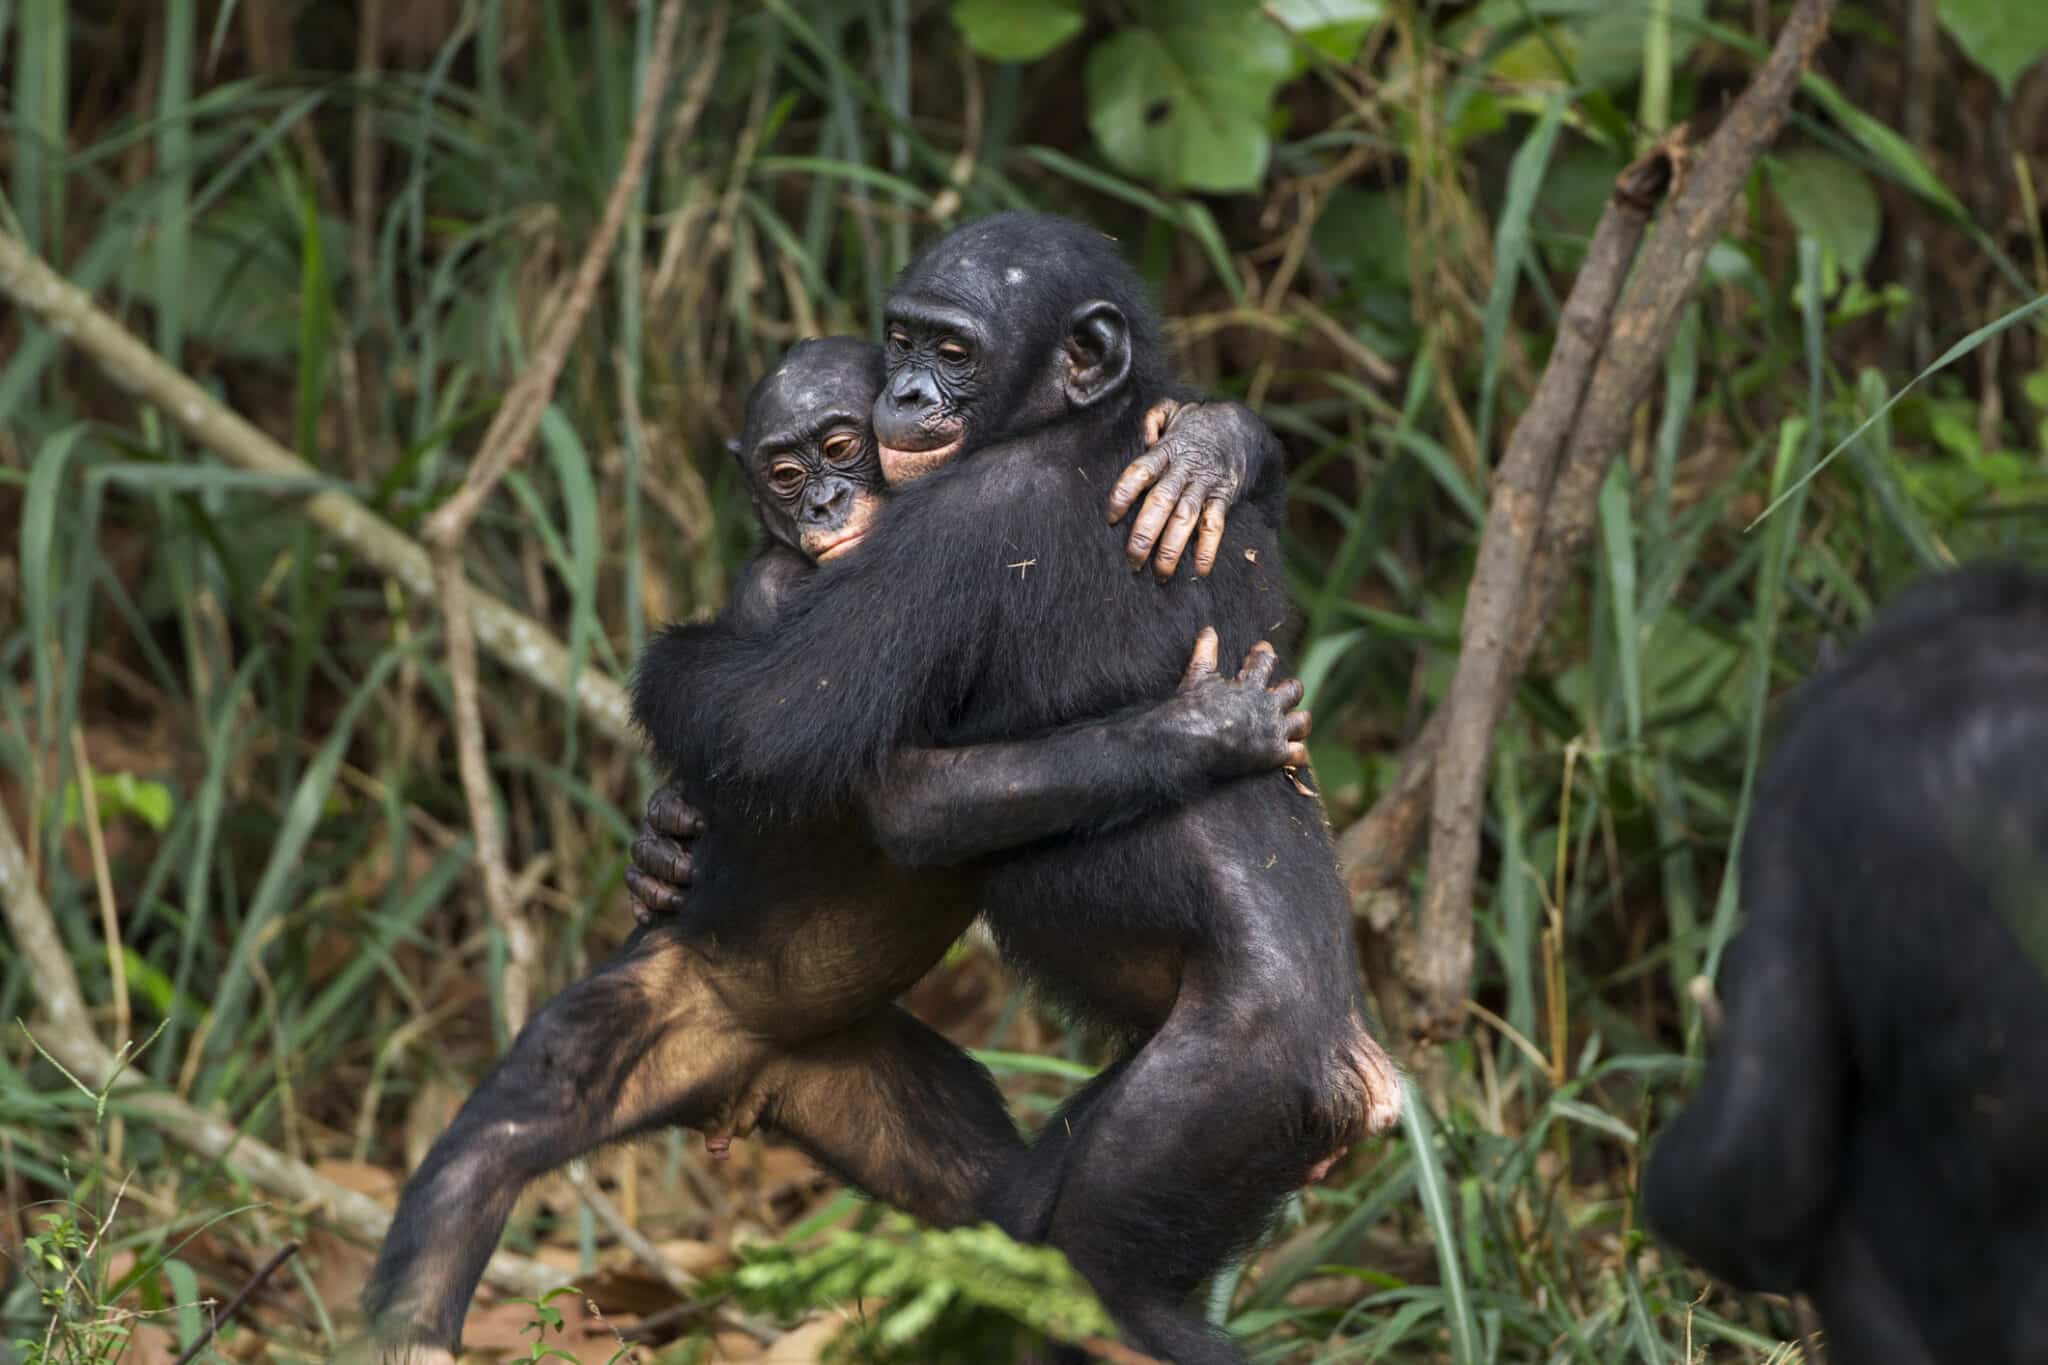 Bonobo juveniles hugging each other